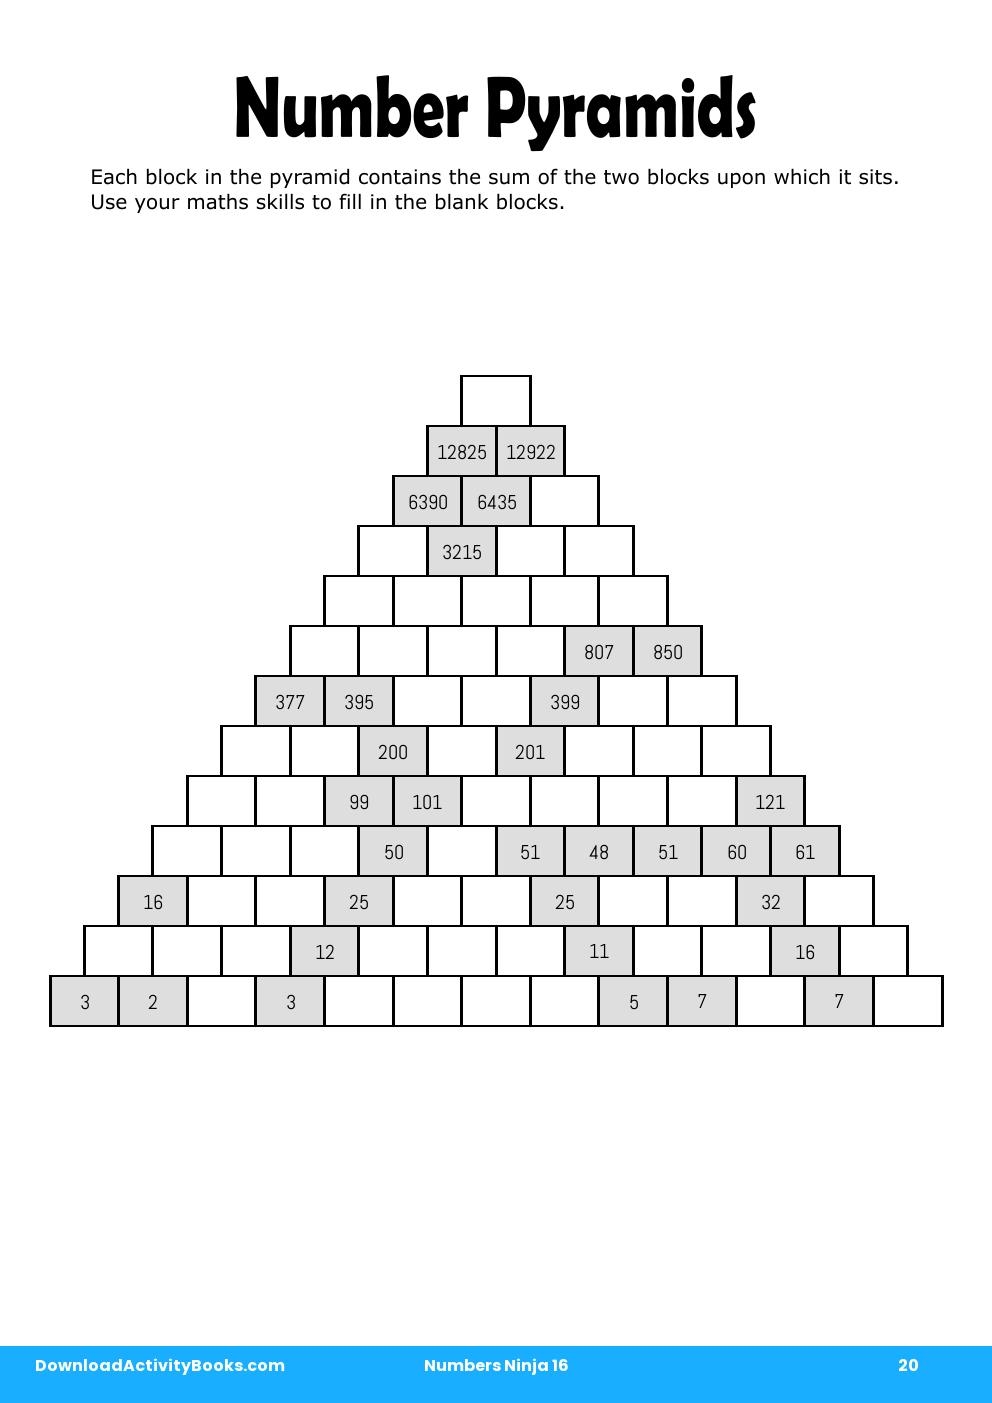 Number Pyramids in Numbers Ninja 16